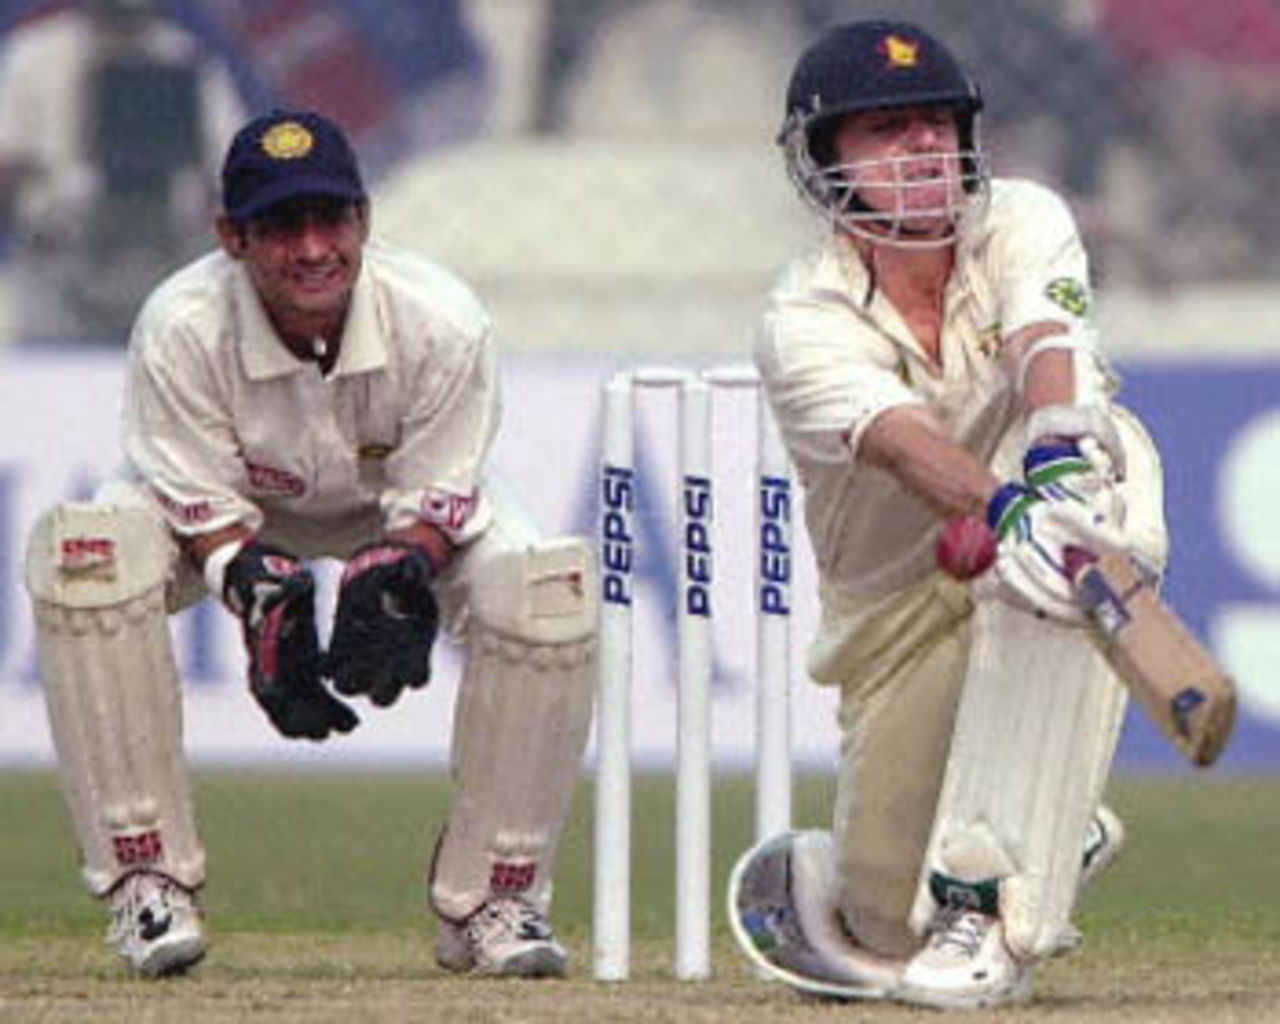 Paul Strang tries to sweep the ball as Dahiya looks on, Zimbabwe in India, 2000/01, 1st Test, India v Zimbabwe, Feroz Shah Kotla, Delhi, 18-22 November 2000 (Day 2).